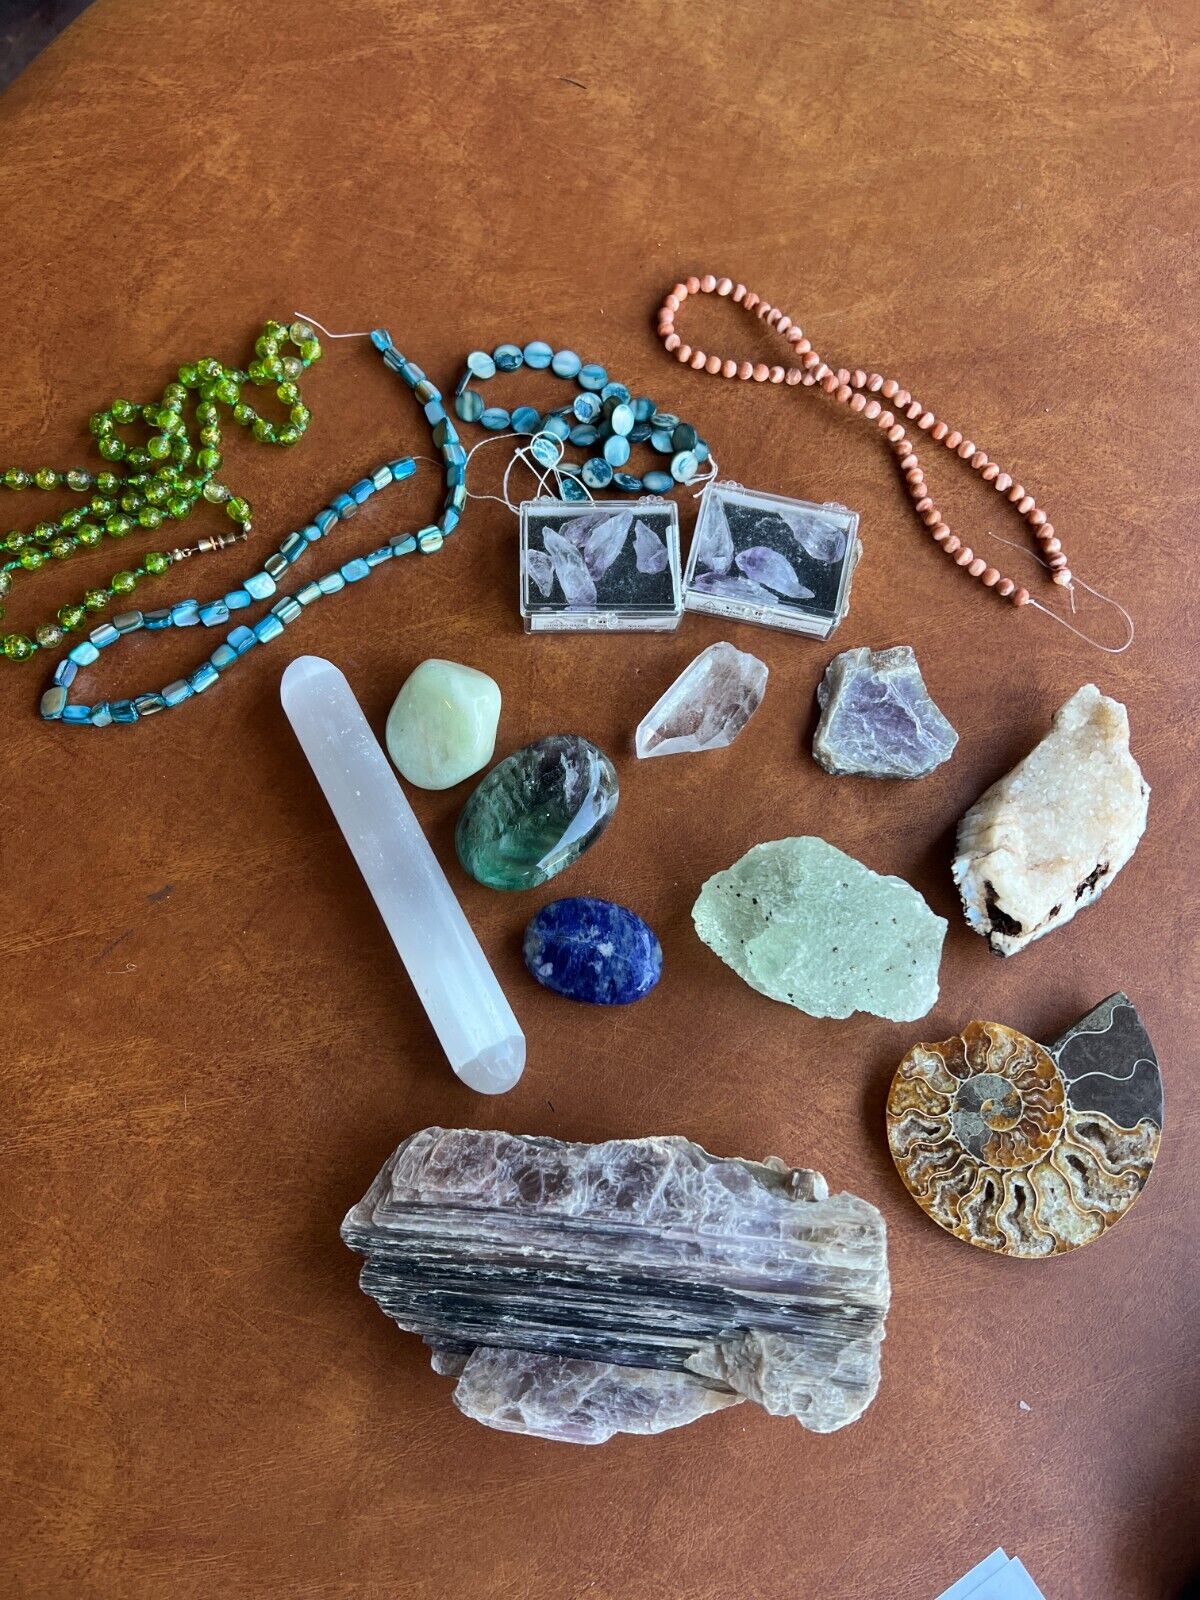 Mixed Lot of Natural Stones, Crystals and Bead Necklaces 3lb 13oz